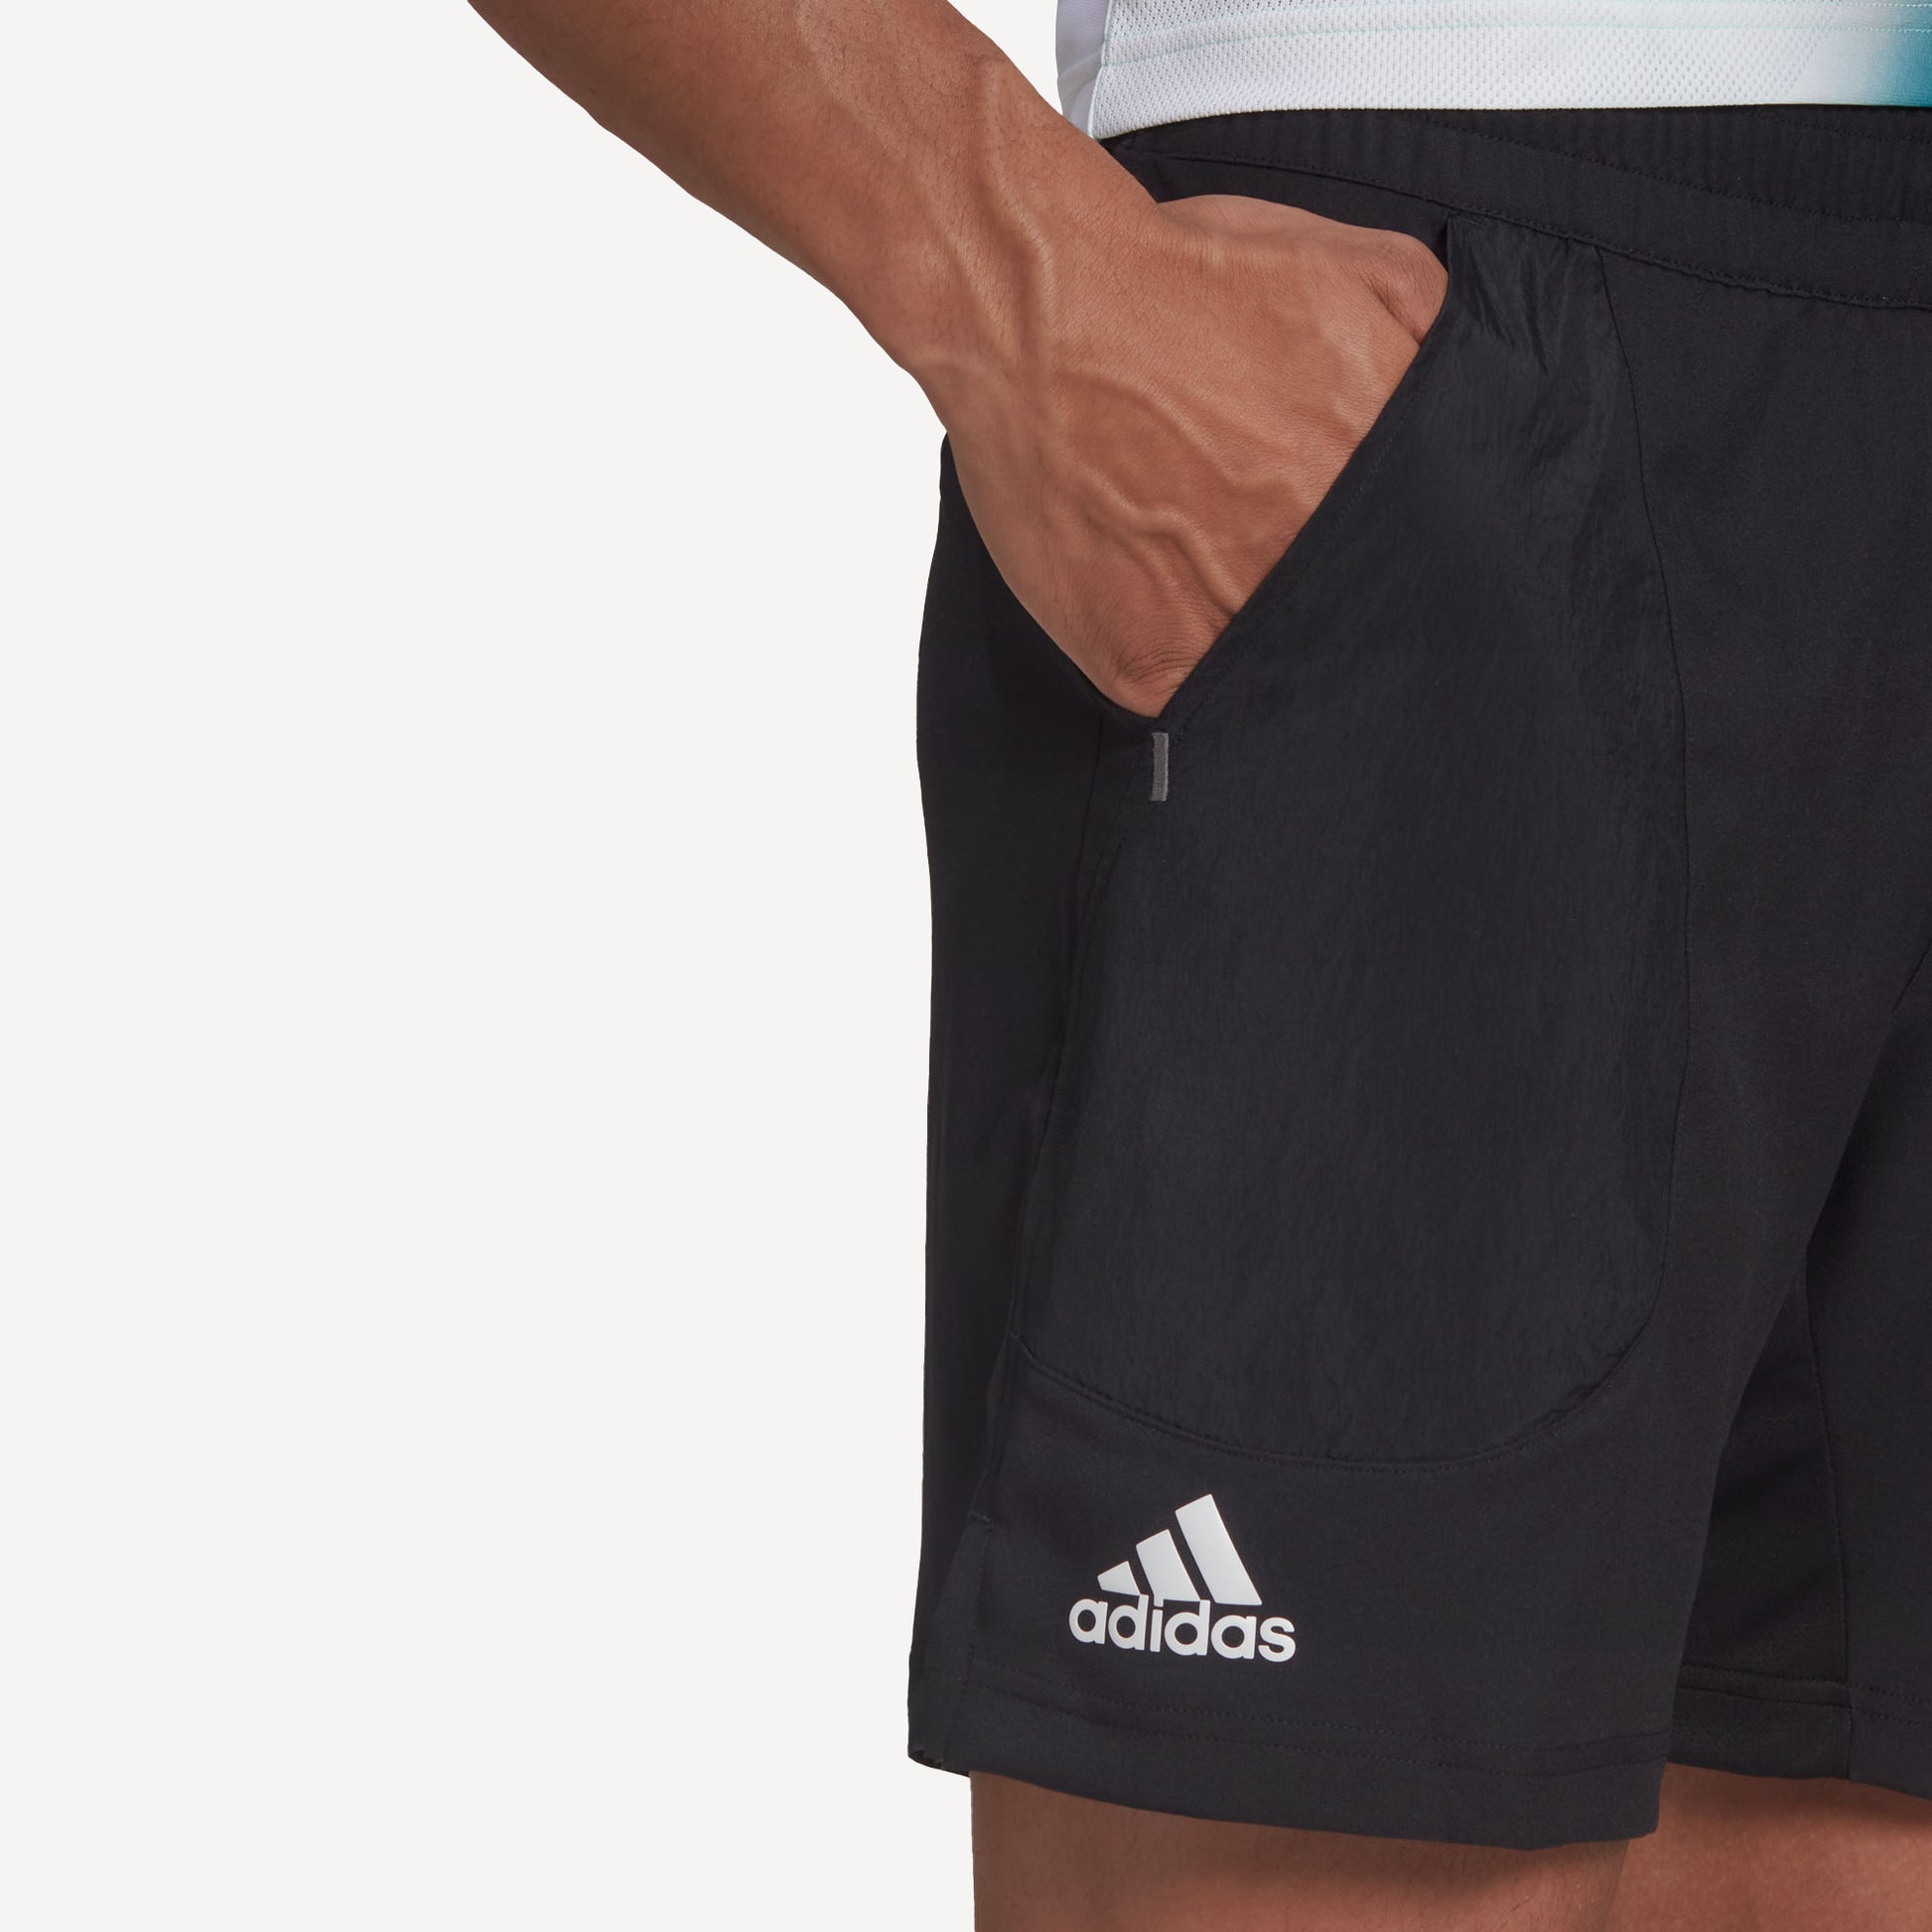 adidas Melbourne Men's 7-Inch Tennis Shorts Black (4)